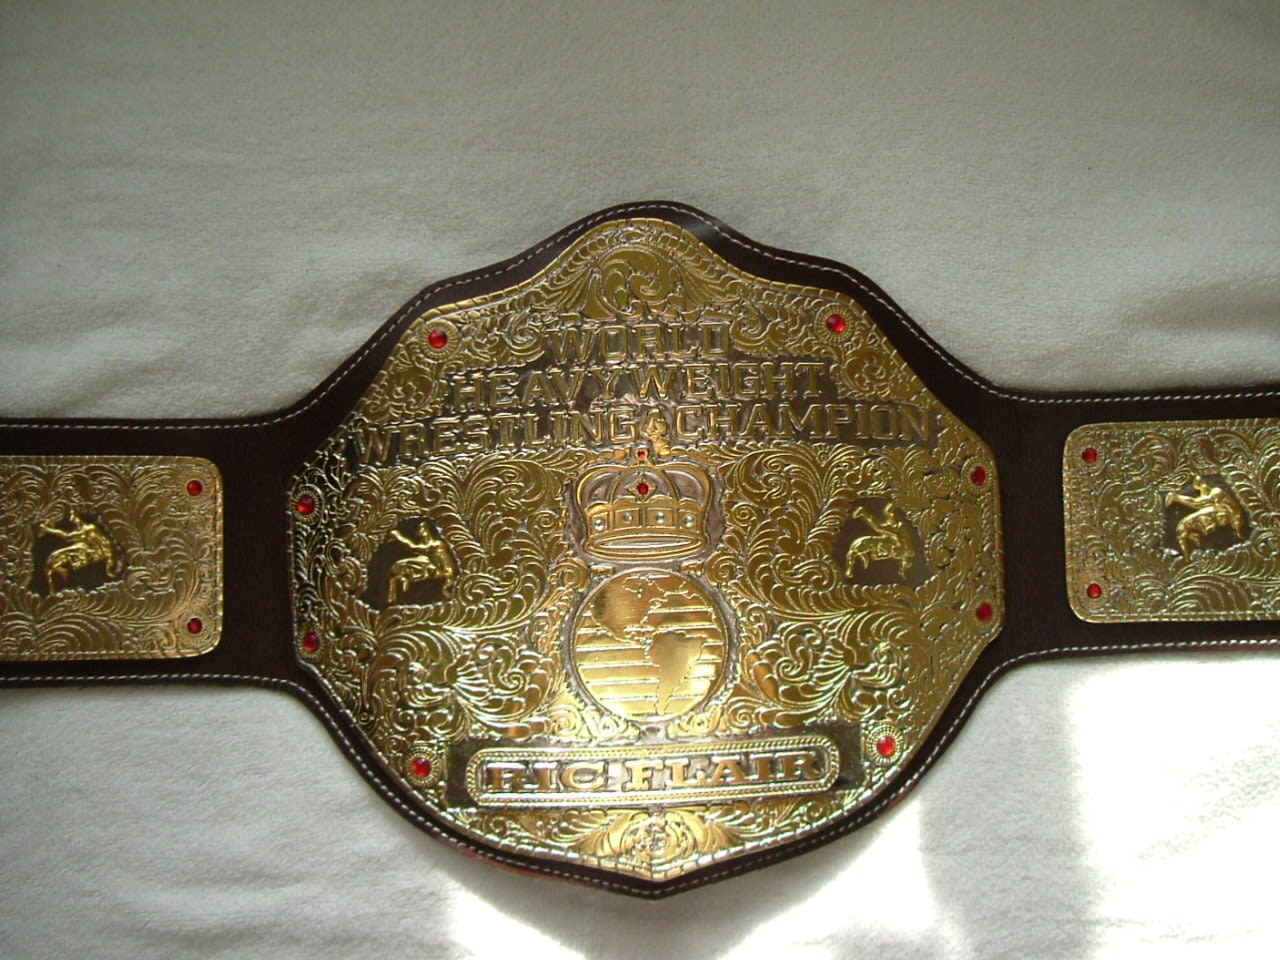 WCW 世界ヘビー級 チャンピオンベルト cbmbandas.com.mx